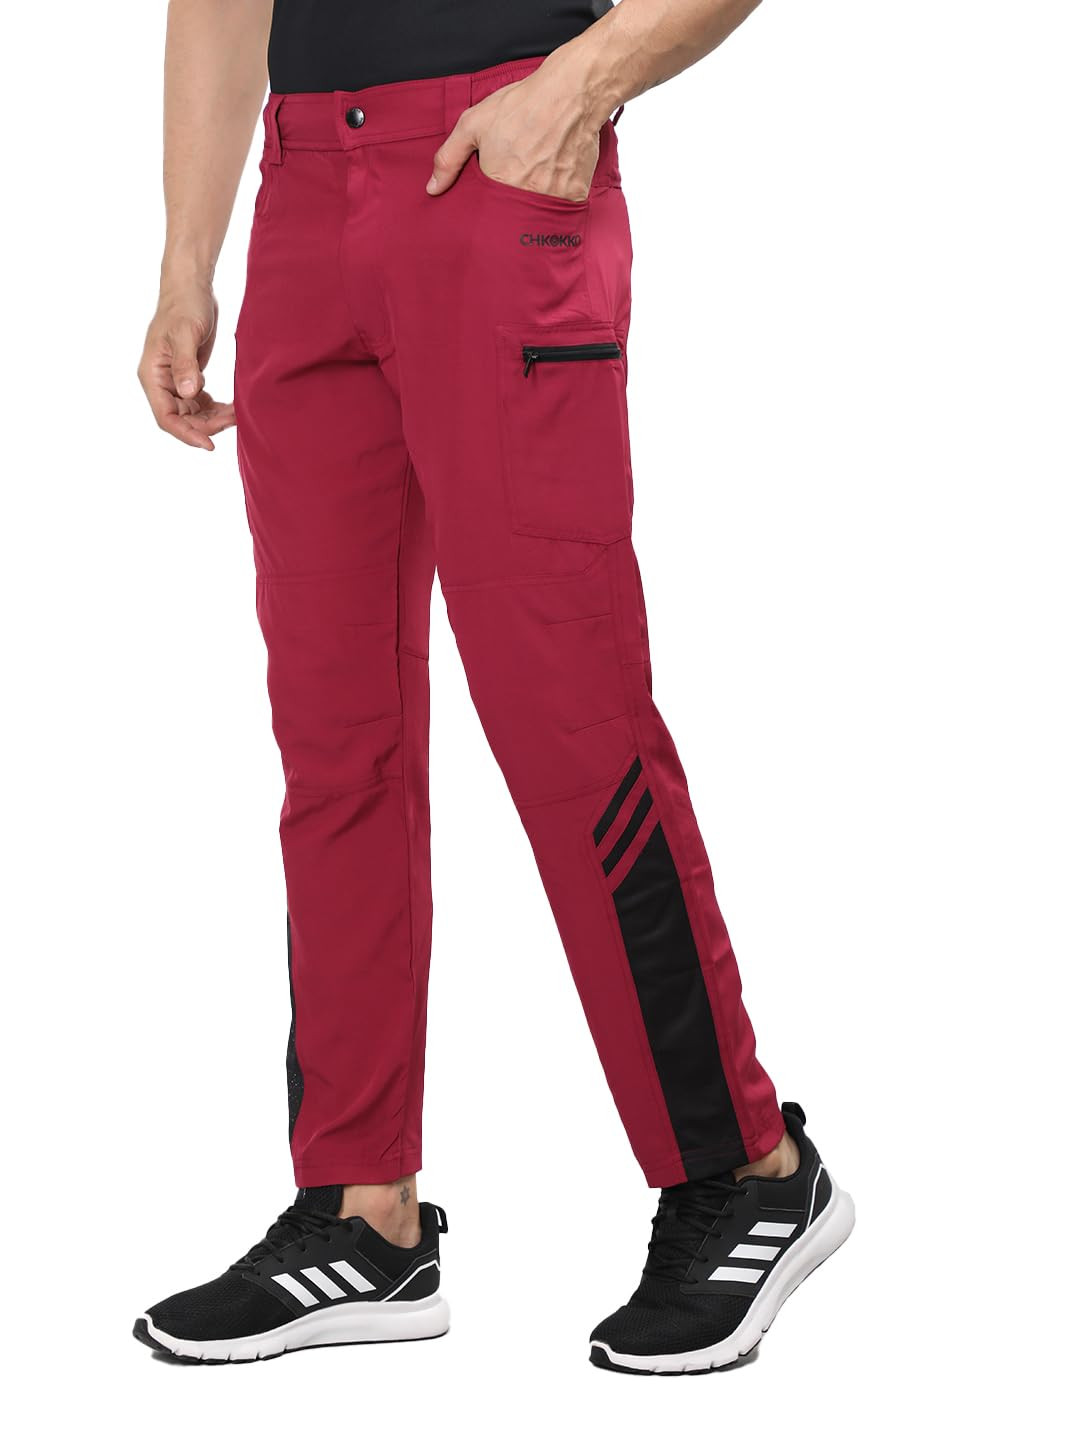 Men's Red Camel Brown Cargo Pants Pockets Size 28X30 | Brown cargo pants,  Mens pants fashion, Fashion pants